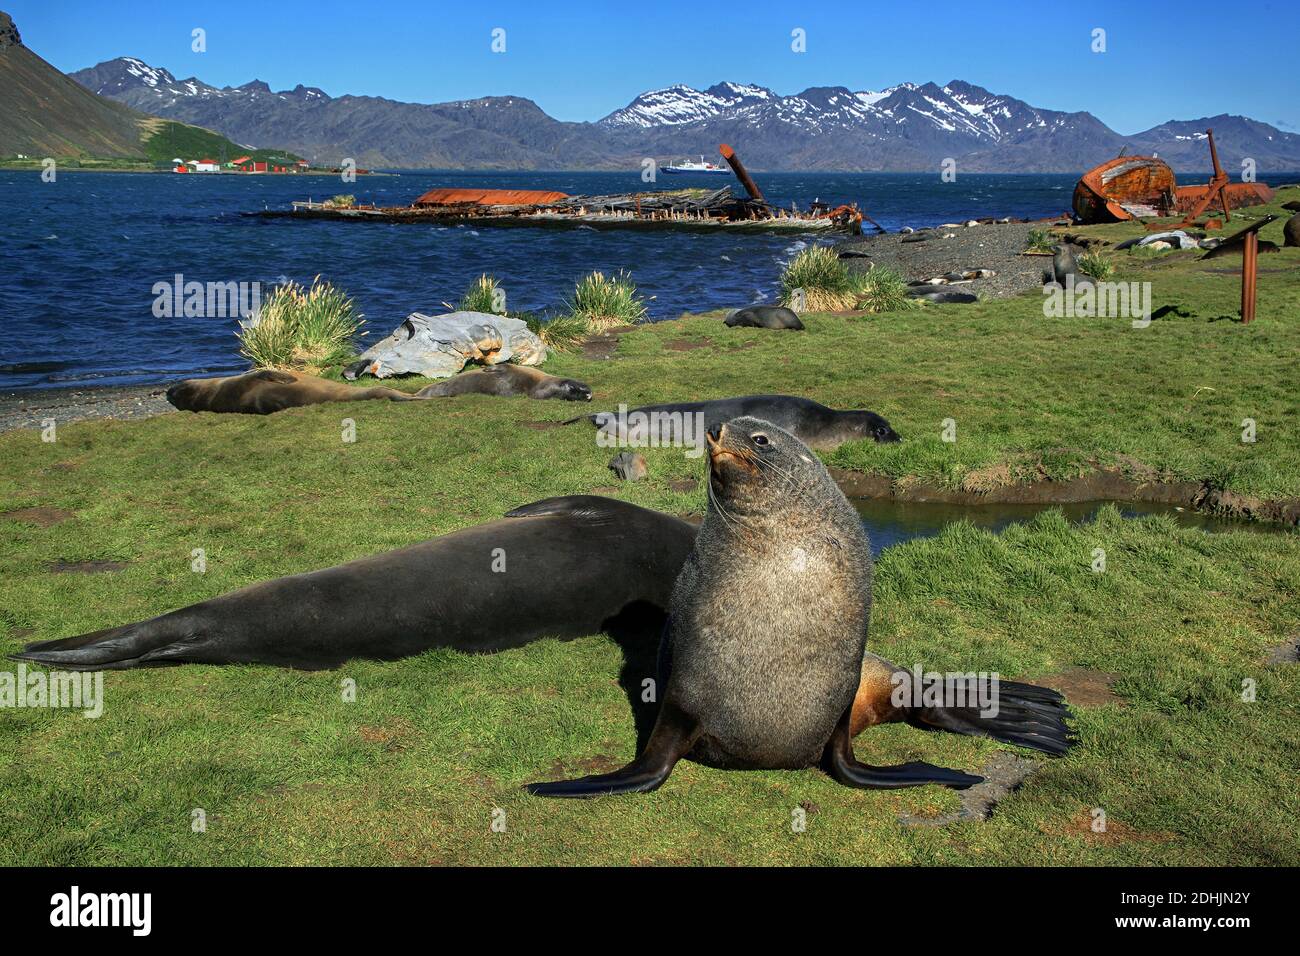 Suedamerika, Antartis, Suedgeorgien, Grytviken, Ehemalige Walfangstation Foto Stock